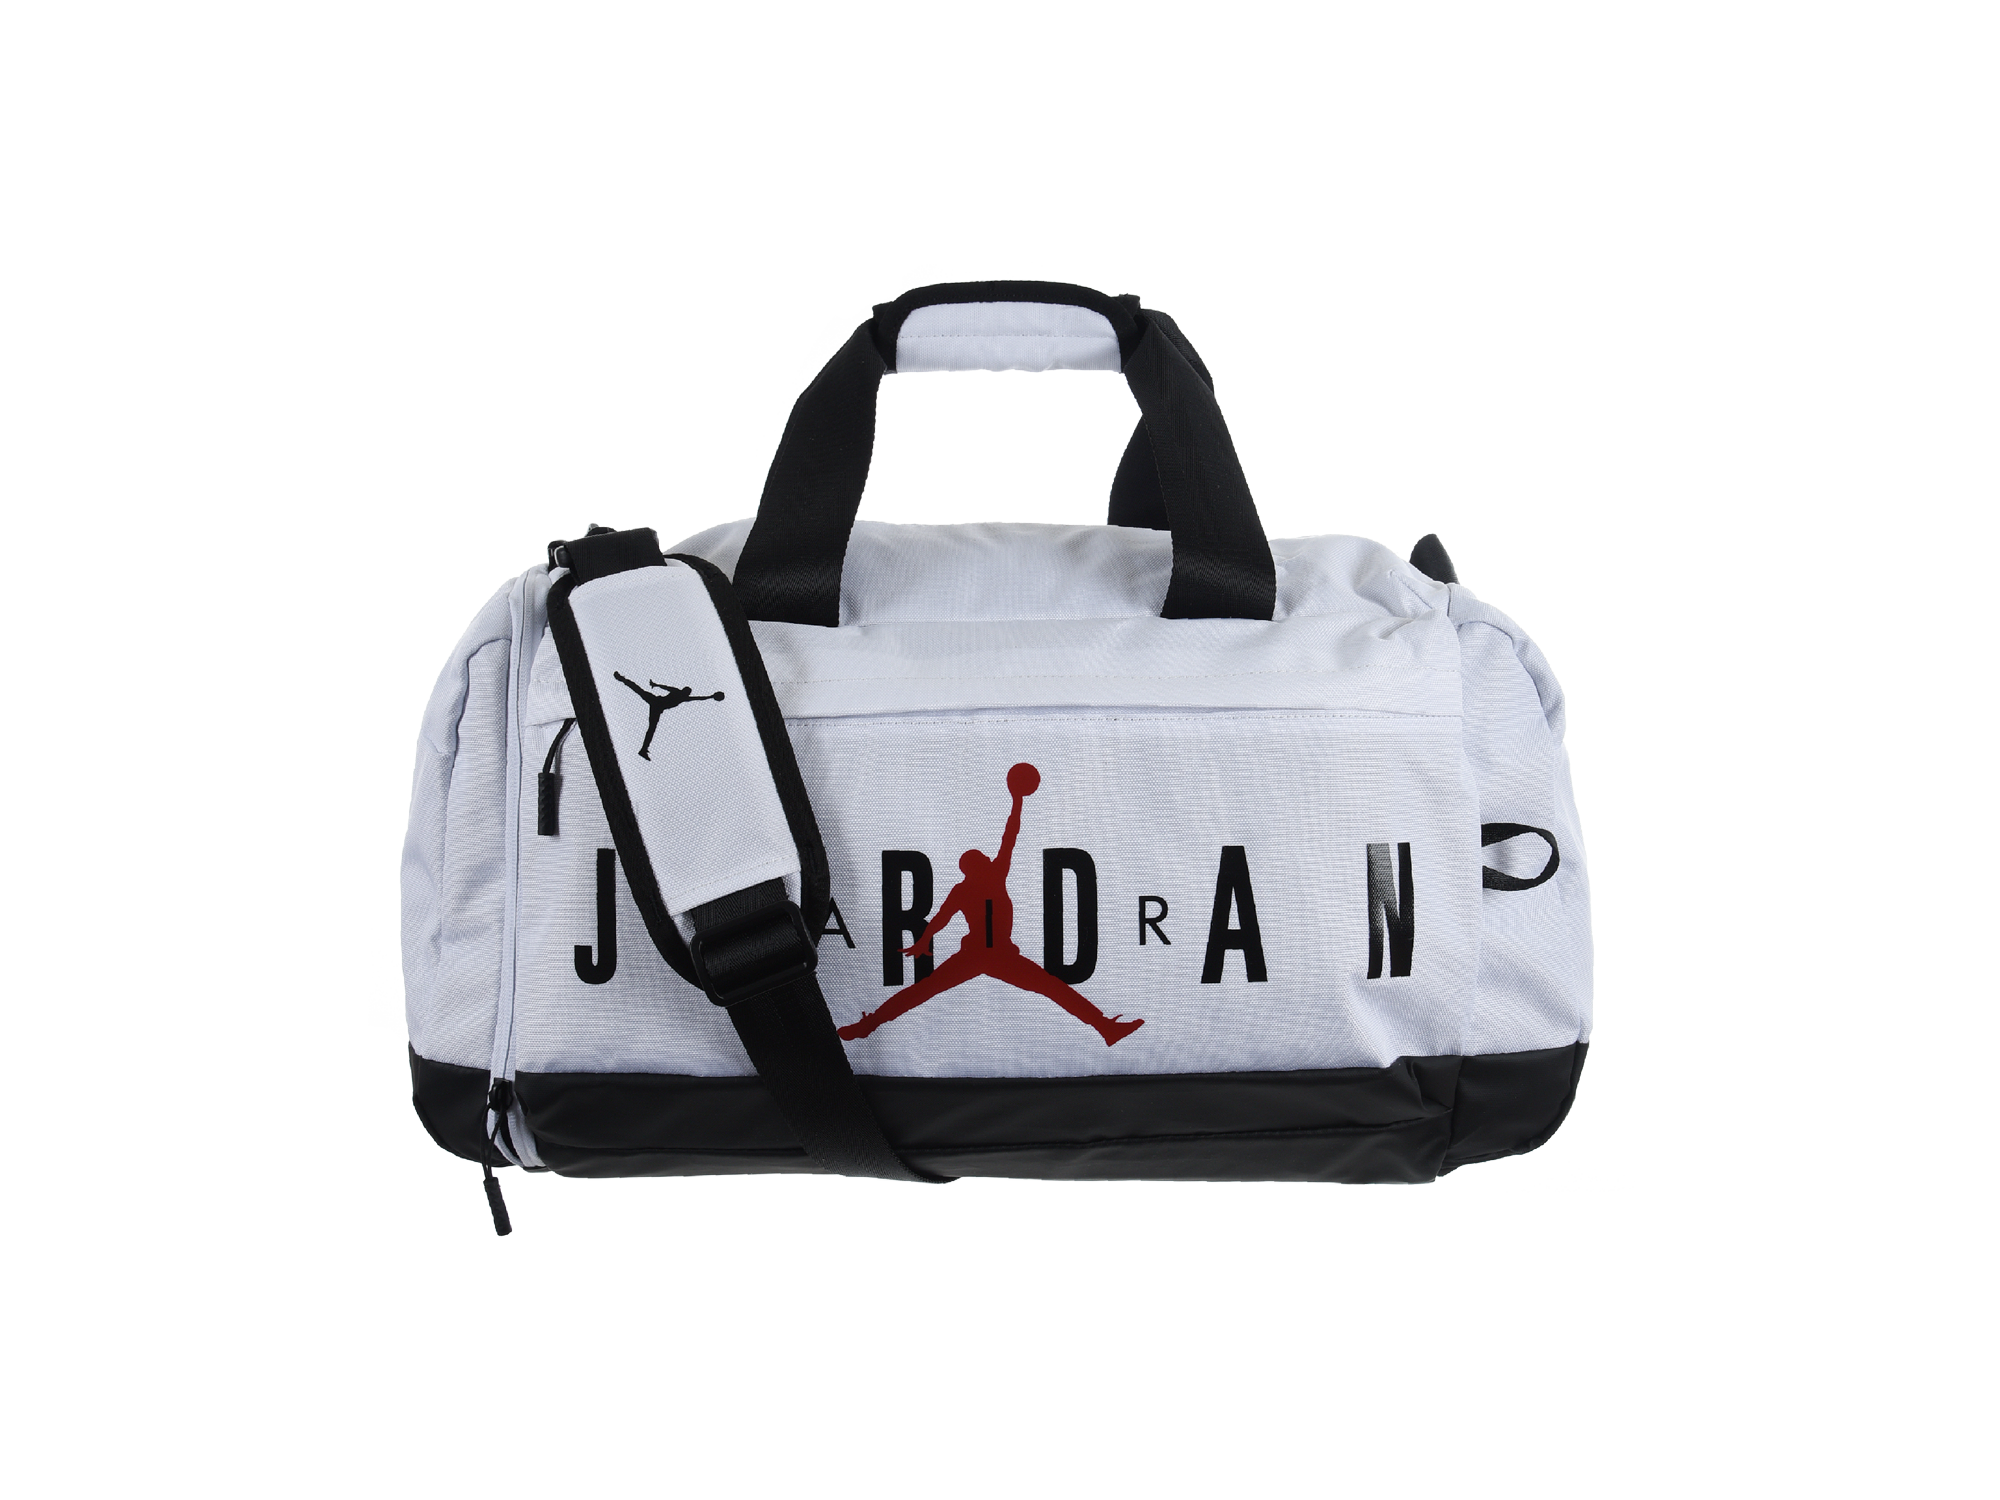 Jordan Air Duffle Bag